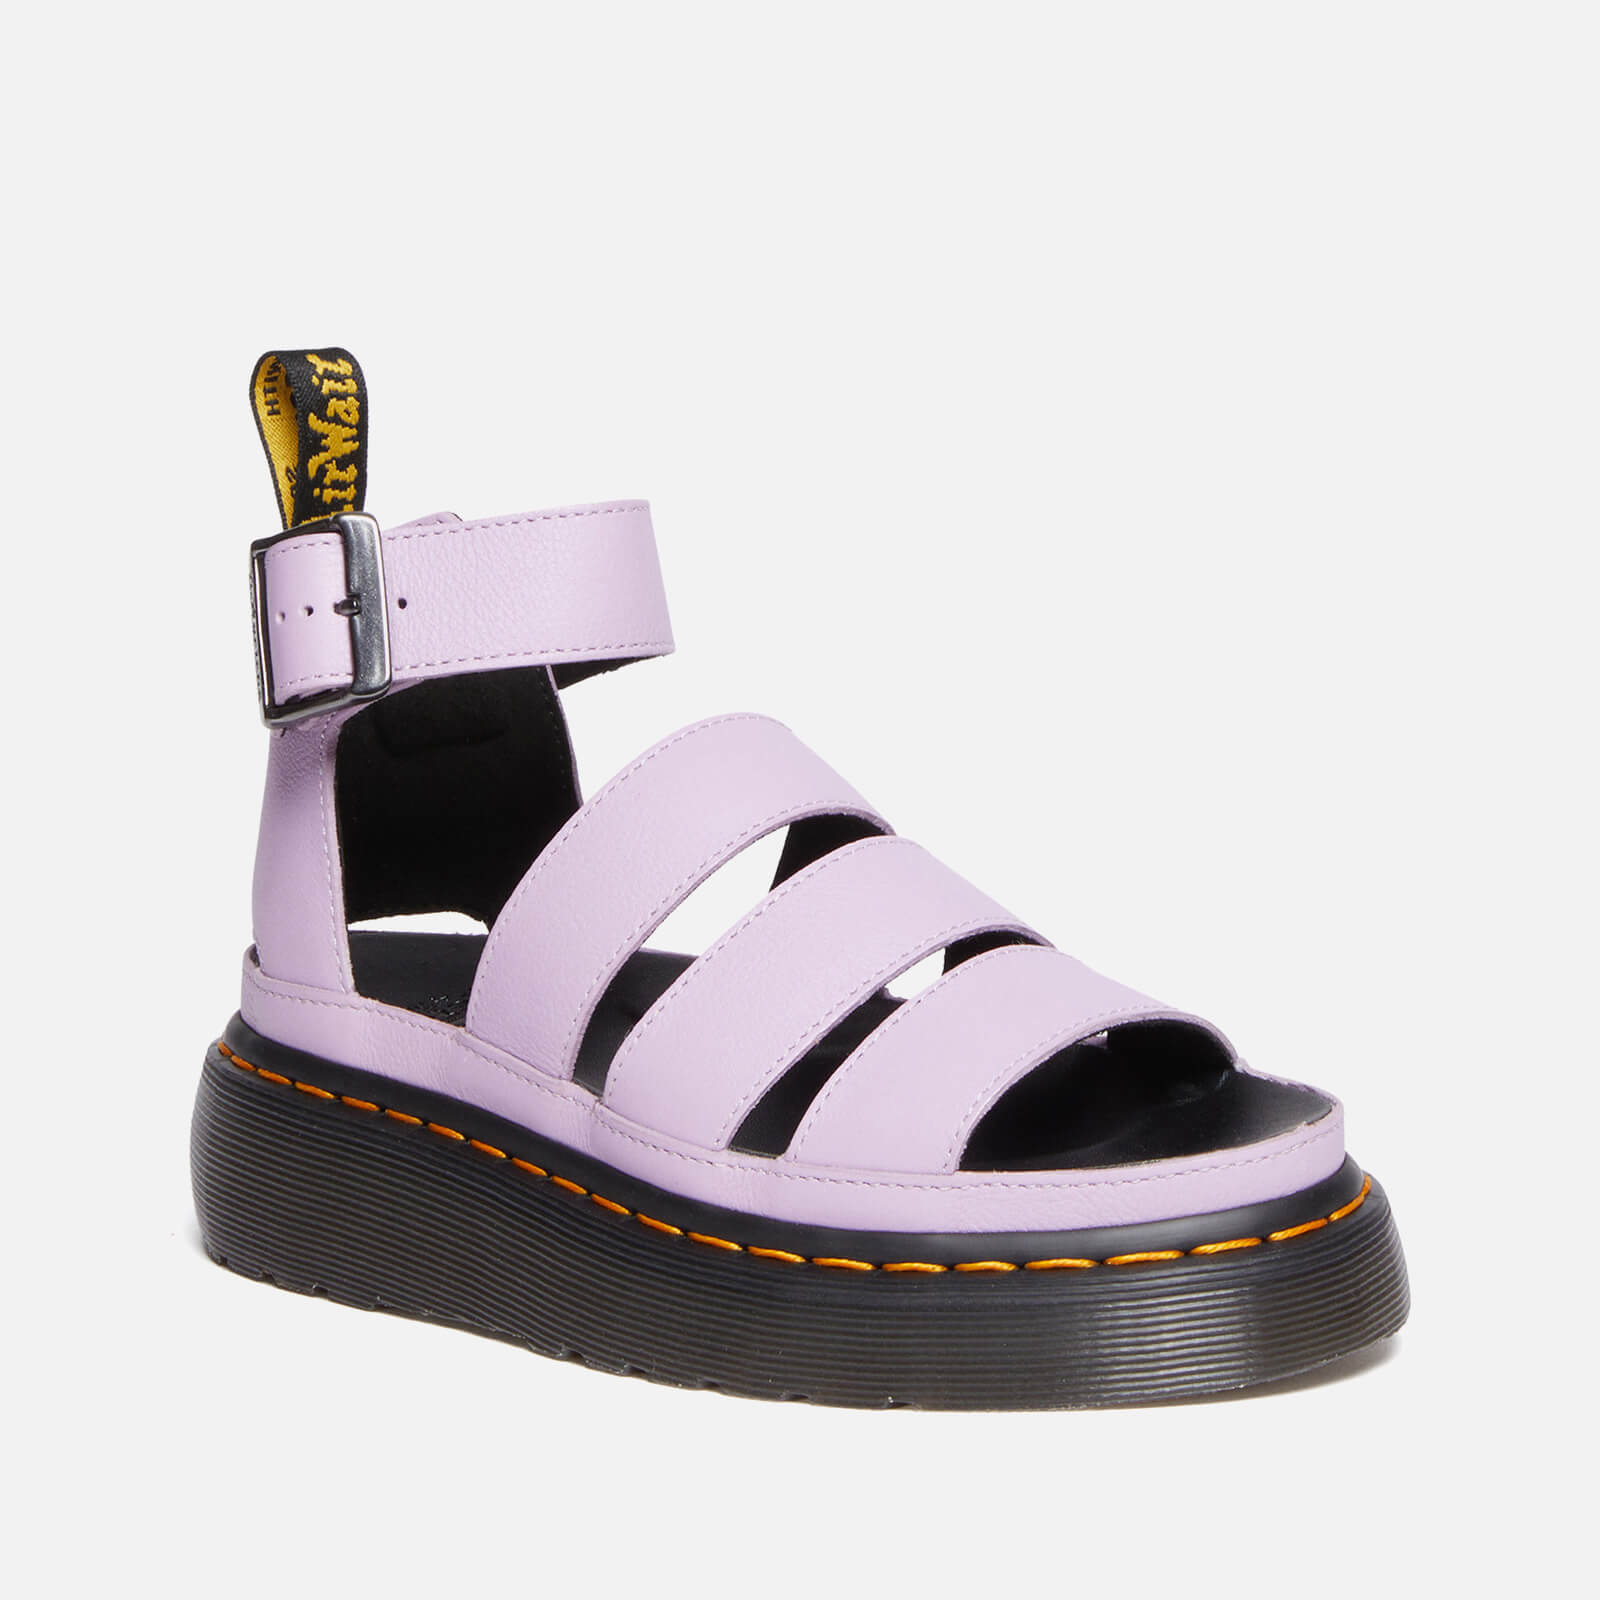 Dr. Martens Women’s Clarissa Ii Quad Leather Sandals